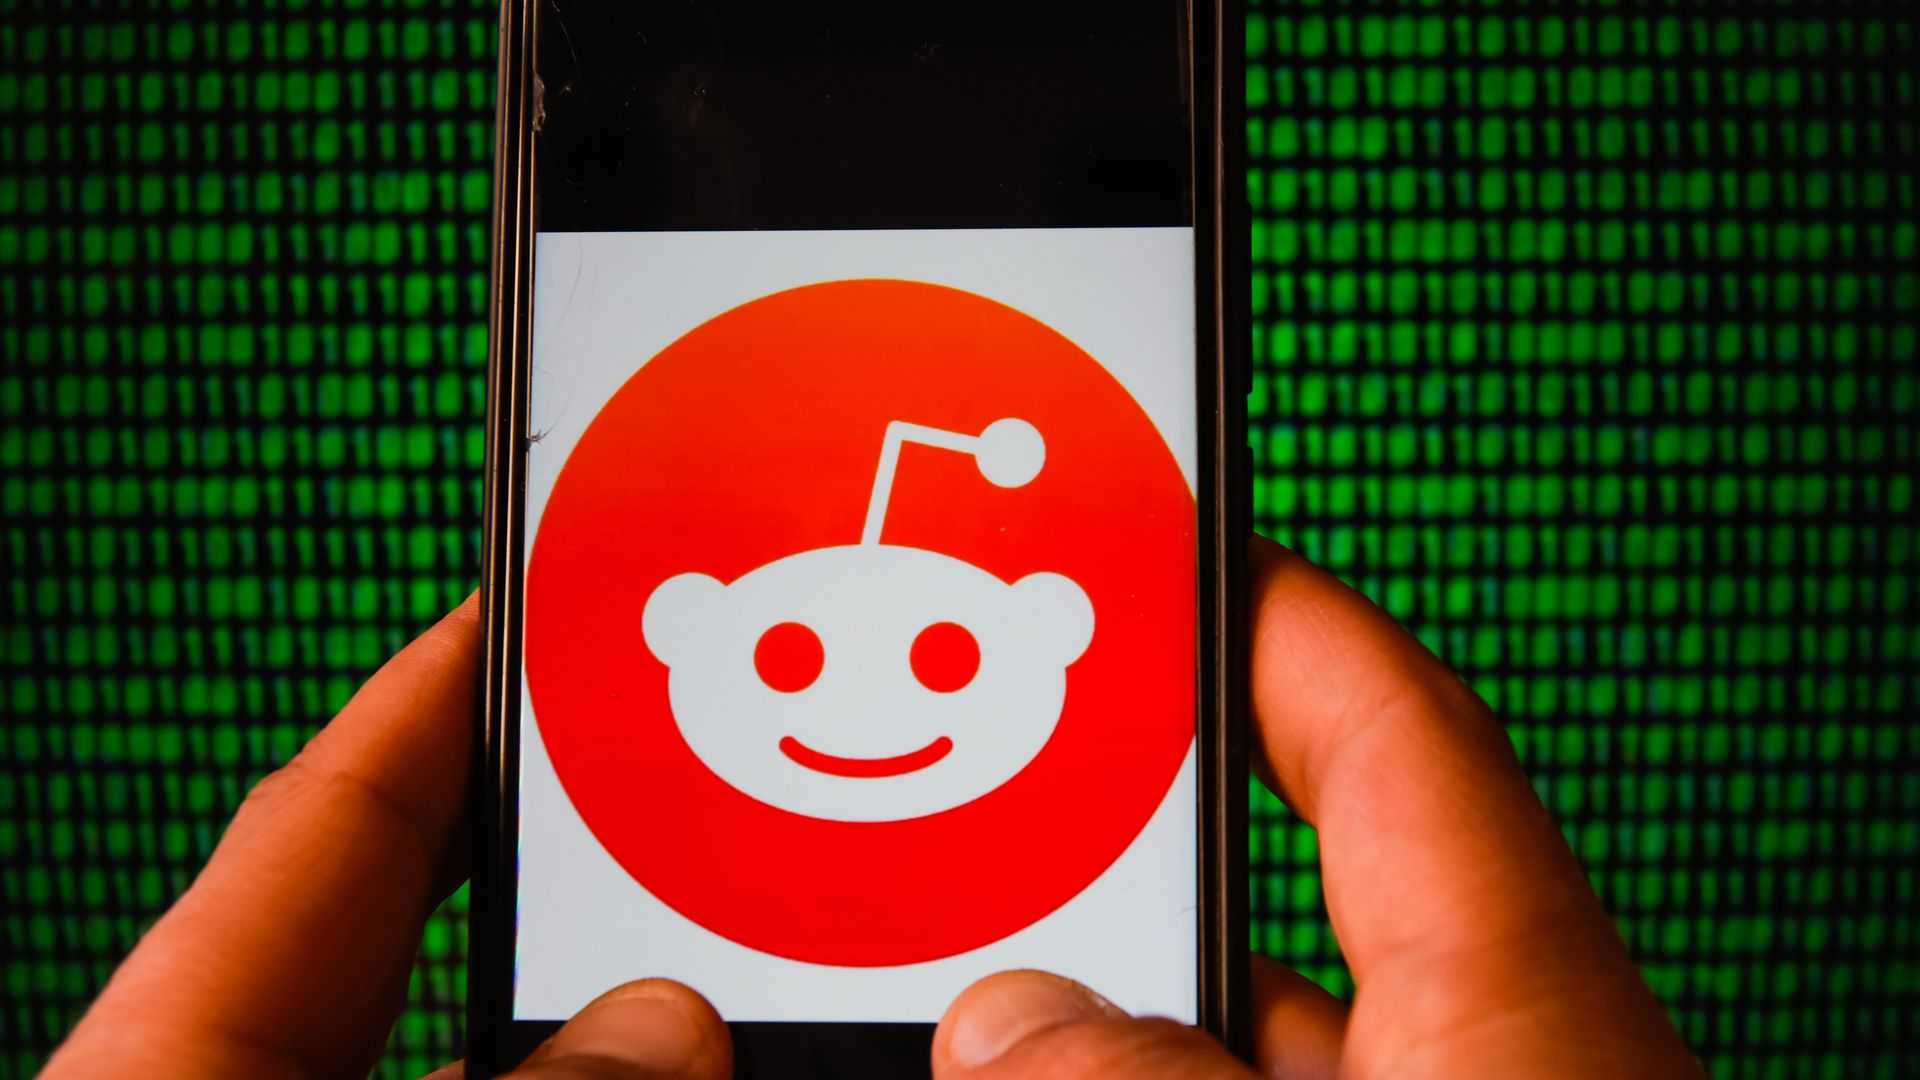 Photo of Reddit logo on a smartphone